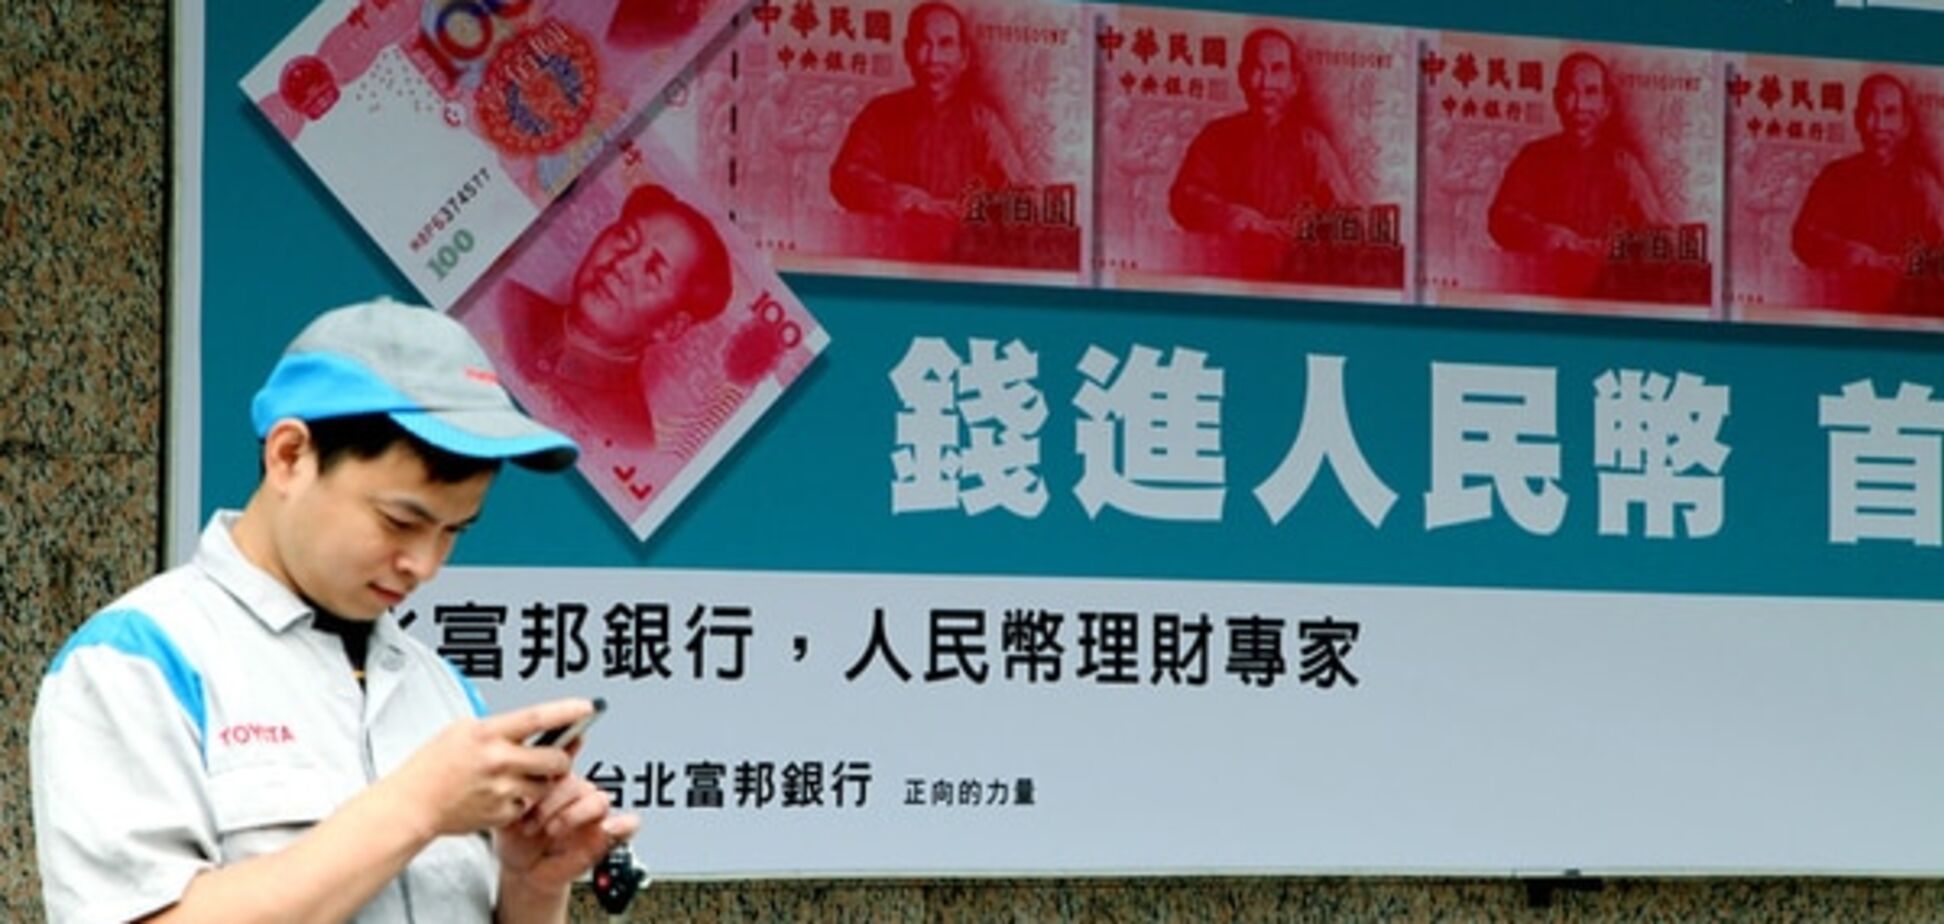 Спасите-помогите: власти Китая требуют от брокеров $16 млрд